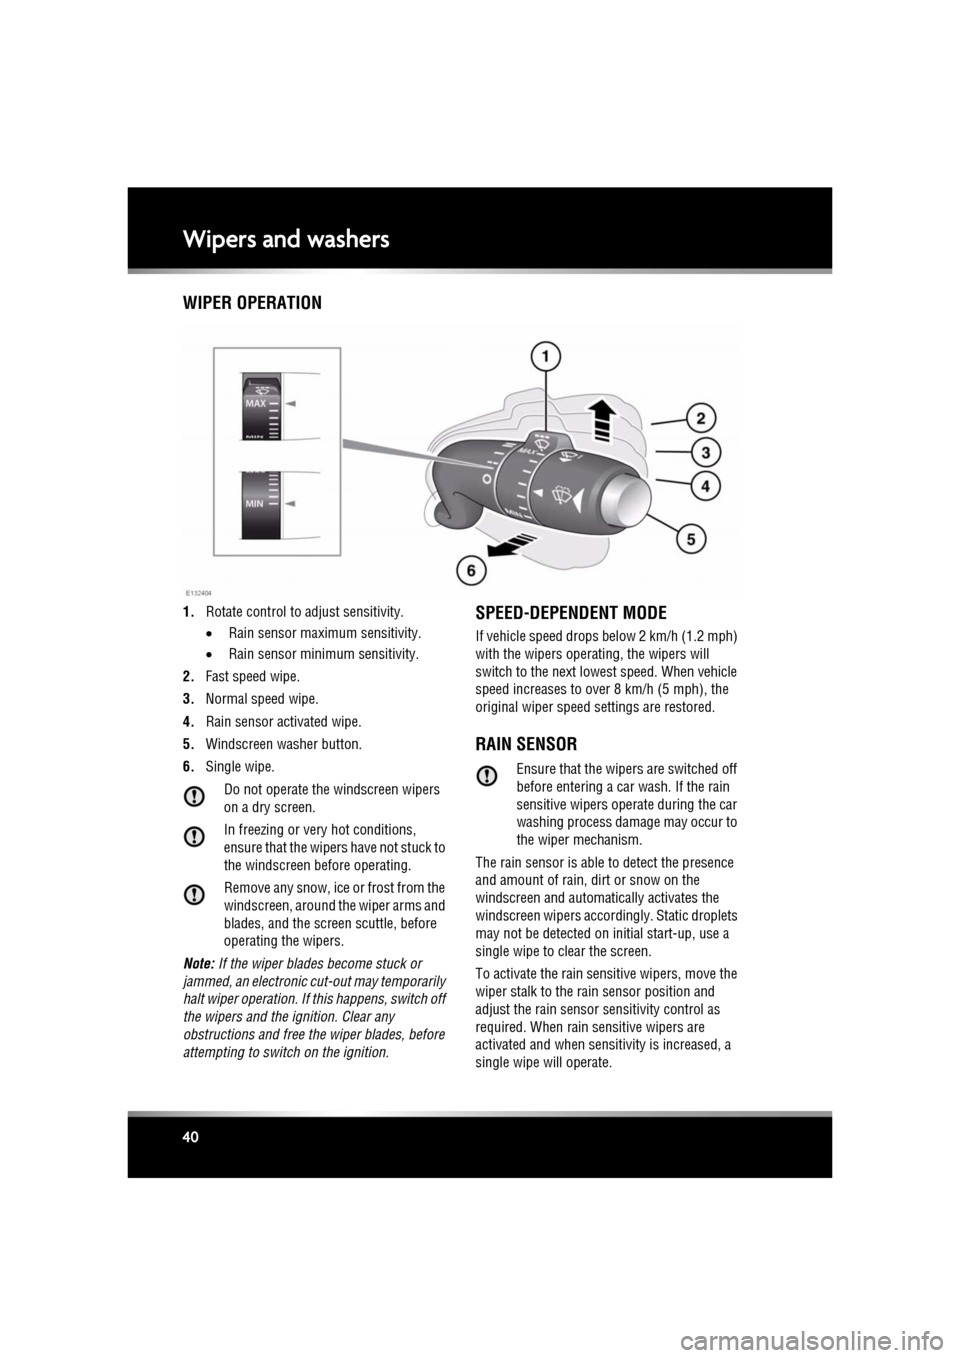 JAGUAR XF 2010 1.G Owners Manual L
(FM8) SEMCON JLR OWNER GUIDE VER 1.00  EURO
LANGUAGE: english-en; MARQUE: jaguar; MODEL: XF
Wipers and washers
40
Wipers and washersWIPER OPERATION
1. Rotate control to adjust sensitivity.
•Rain s